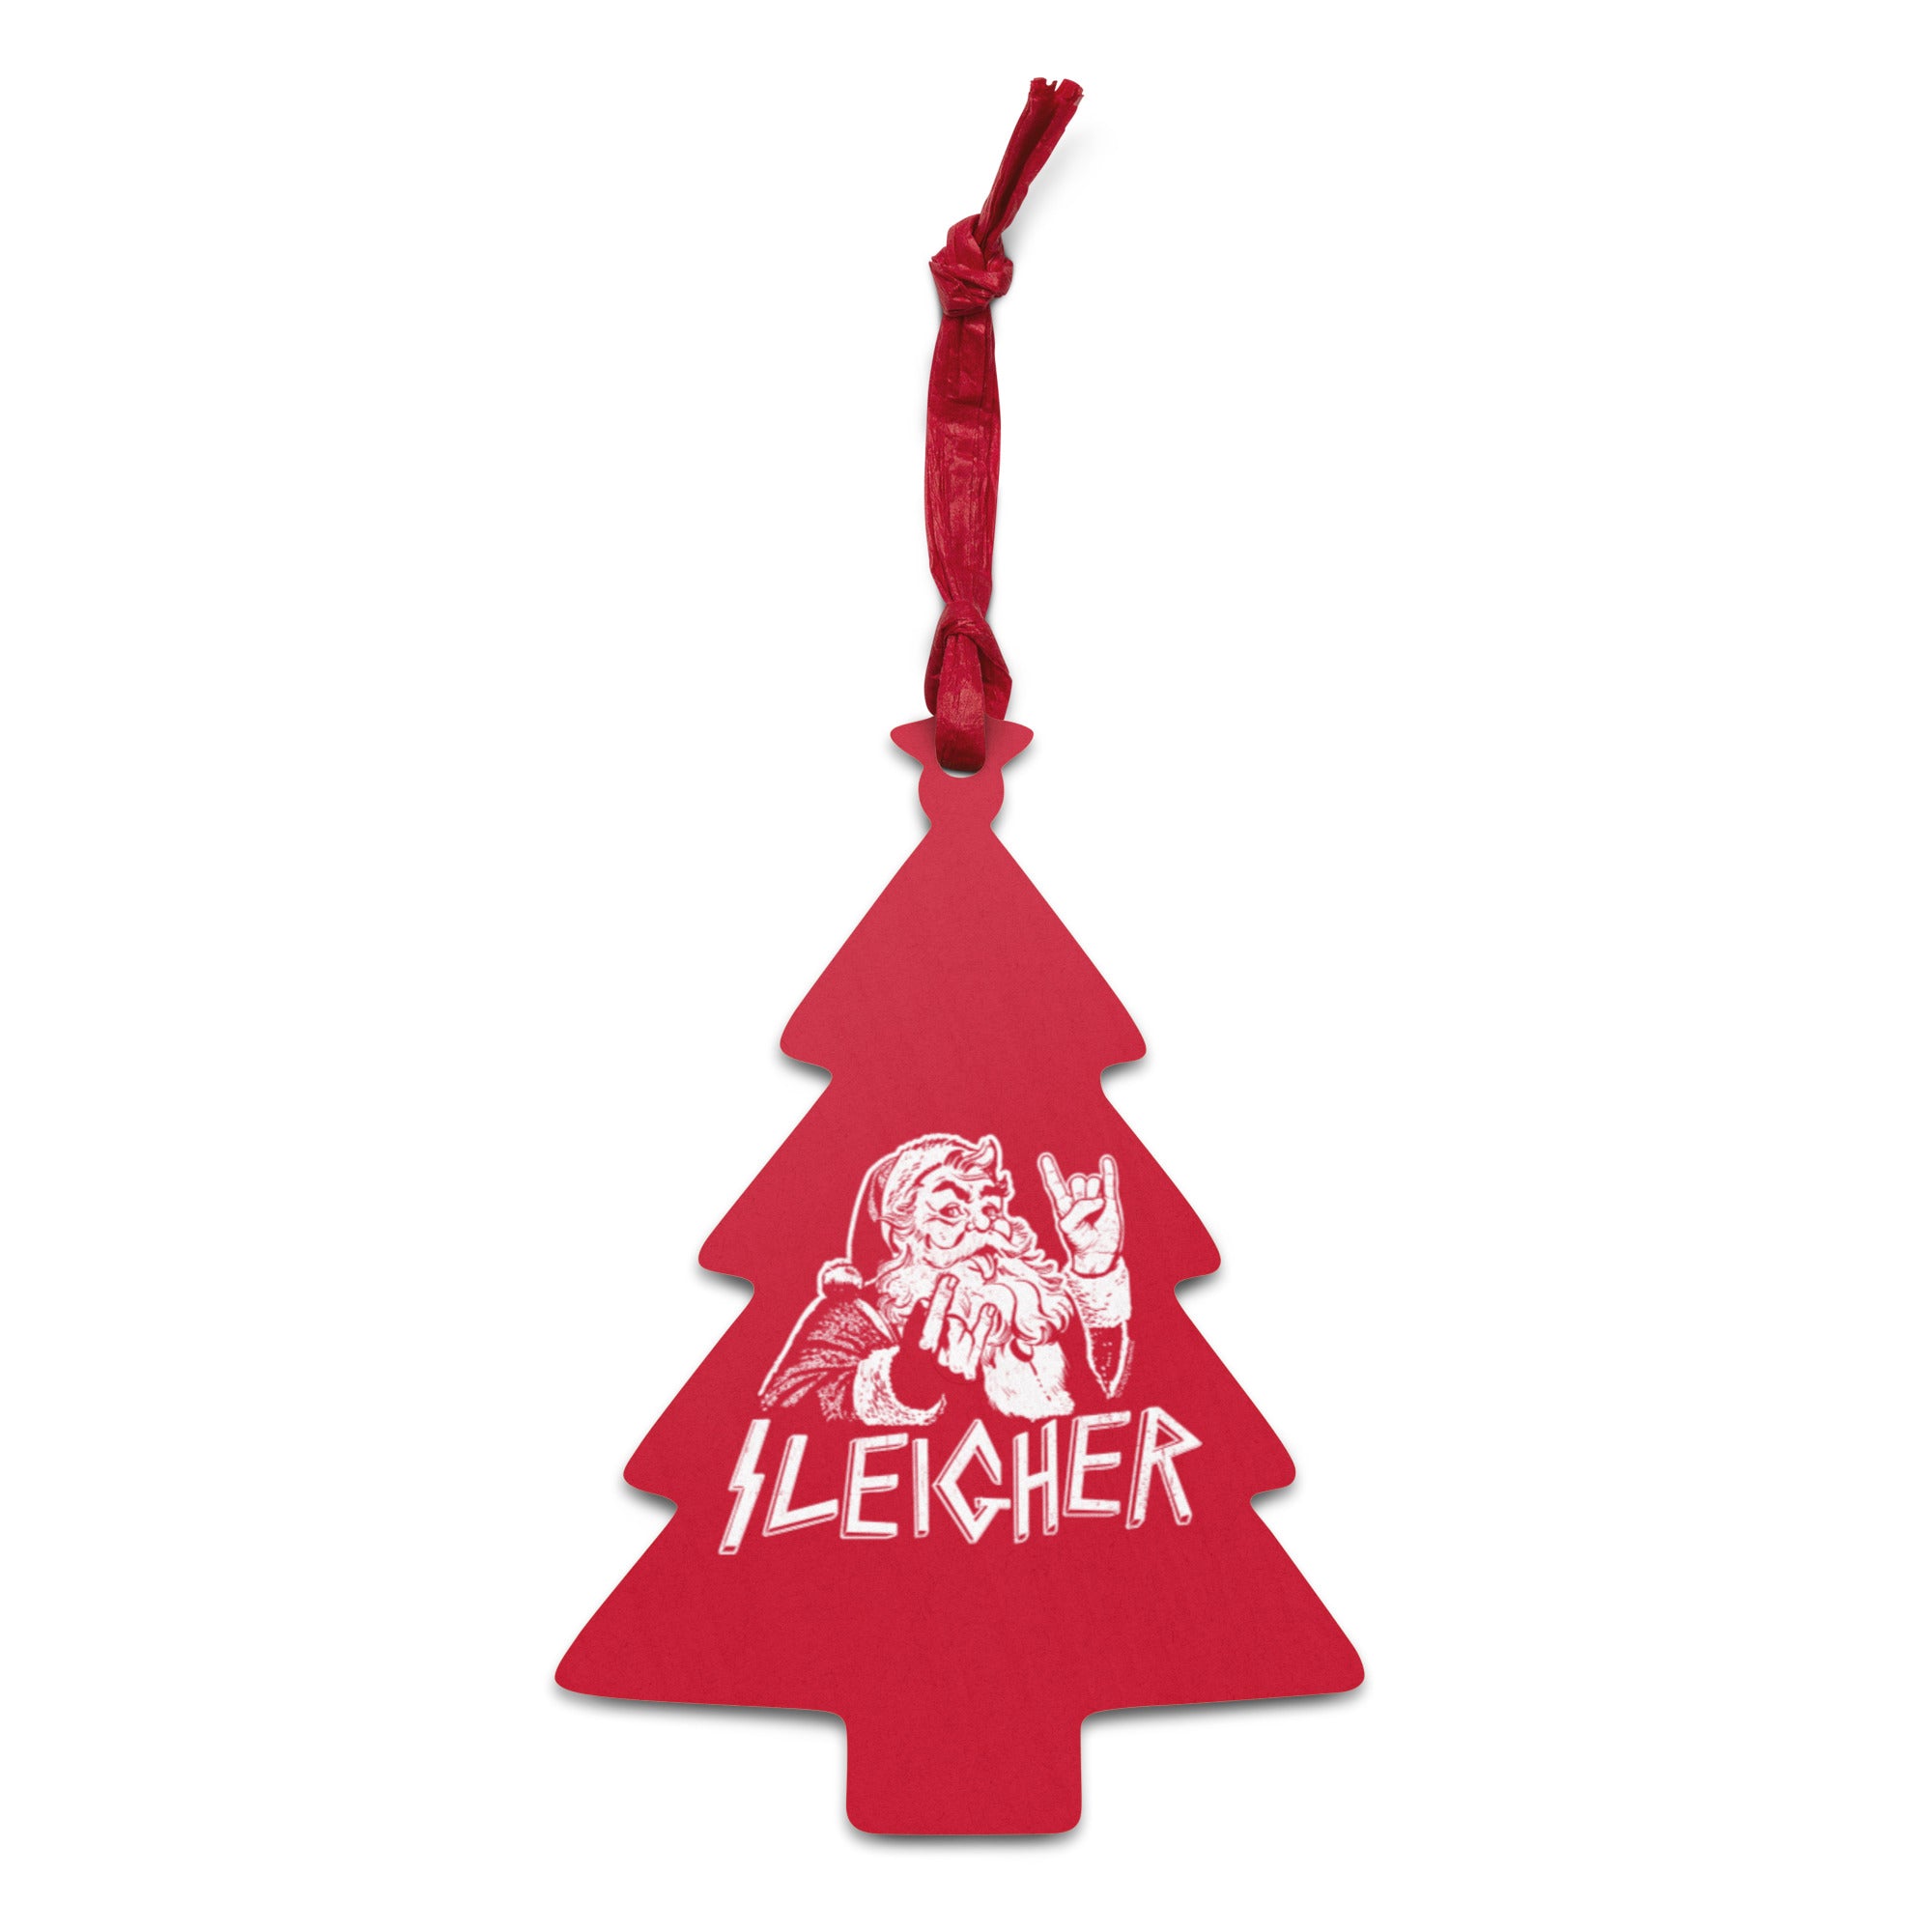 Sleigher Santa Claus Christmas Wooden Ornaments